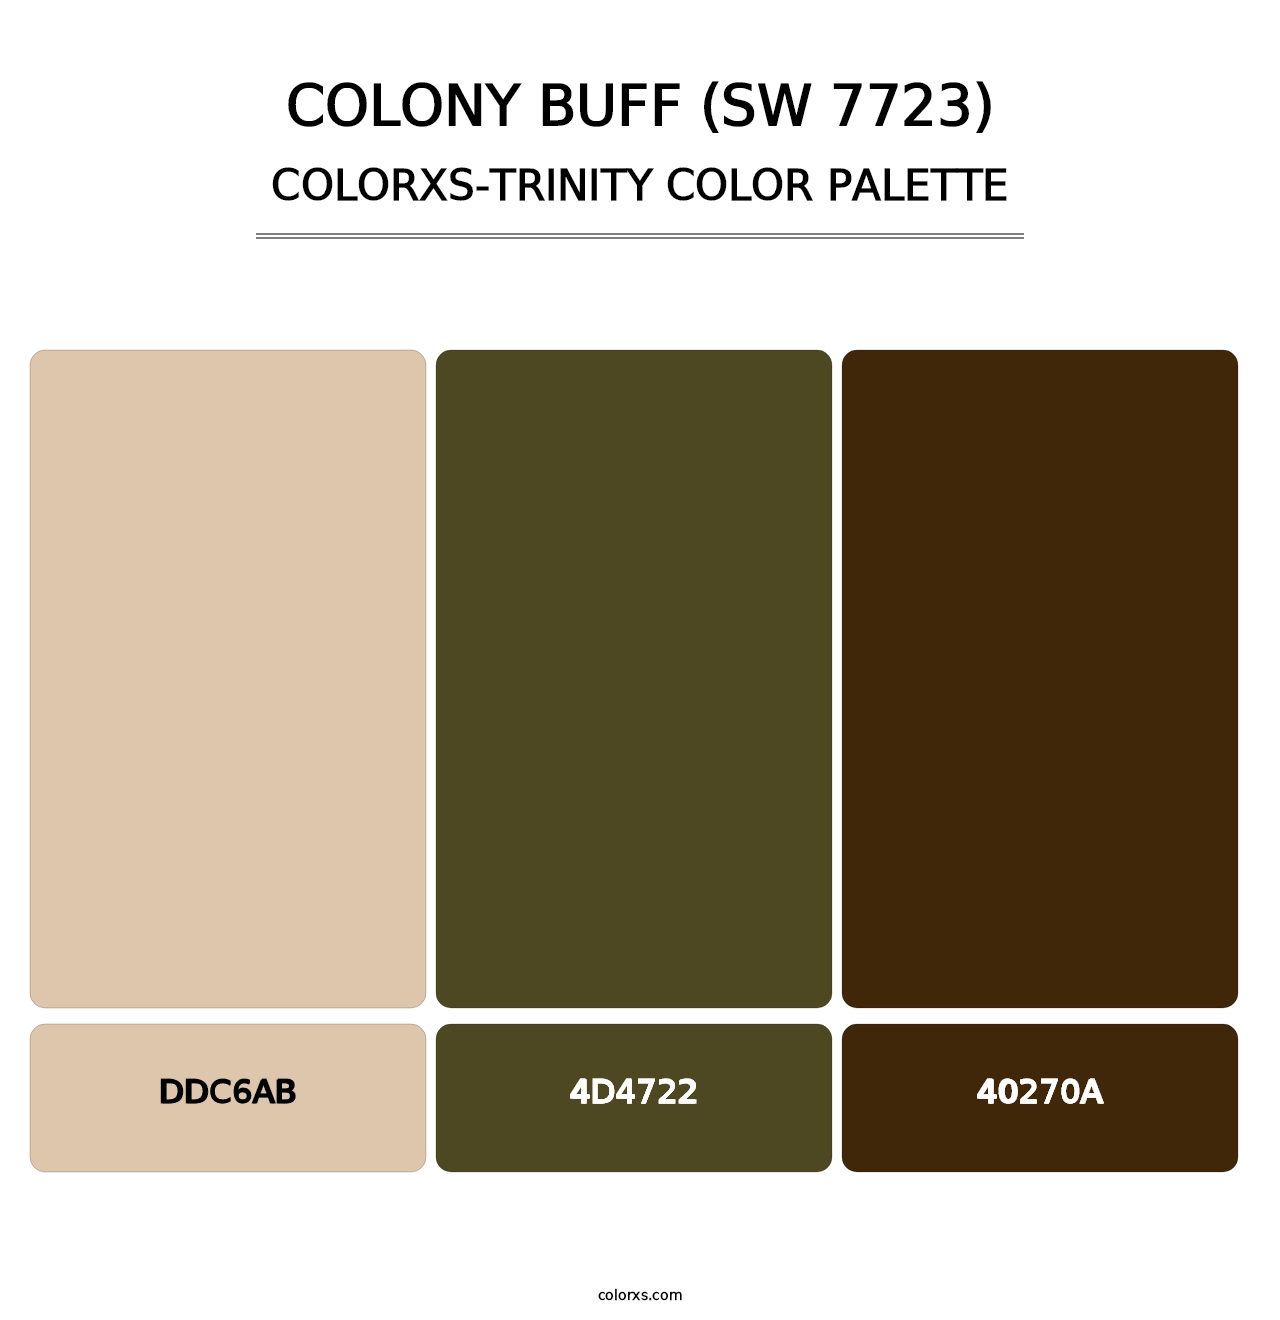 Colony Buff (SW 7723) - Colorxs Trinity Palette